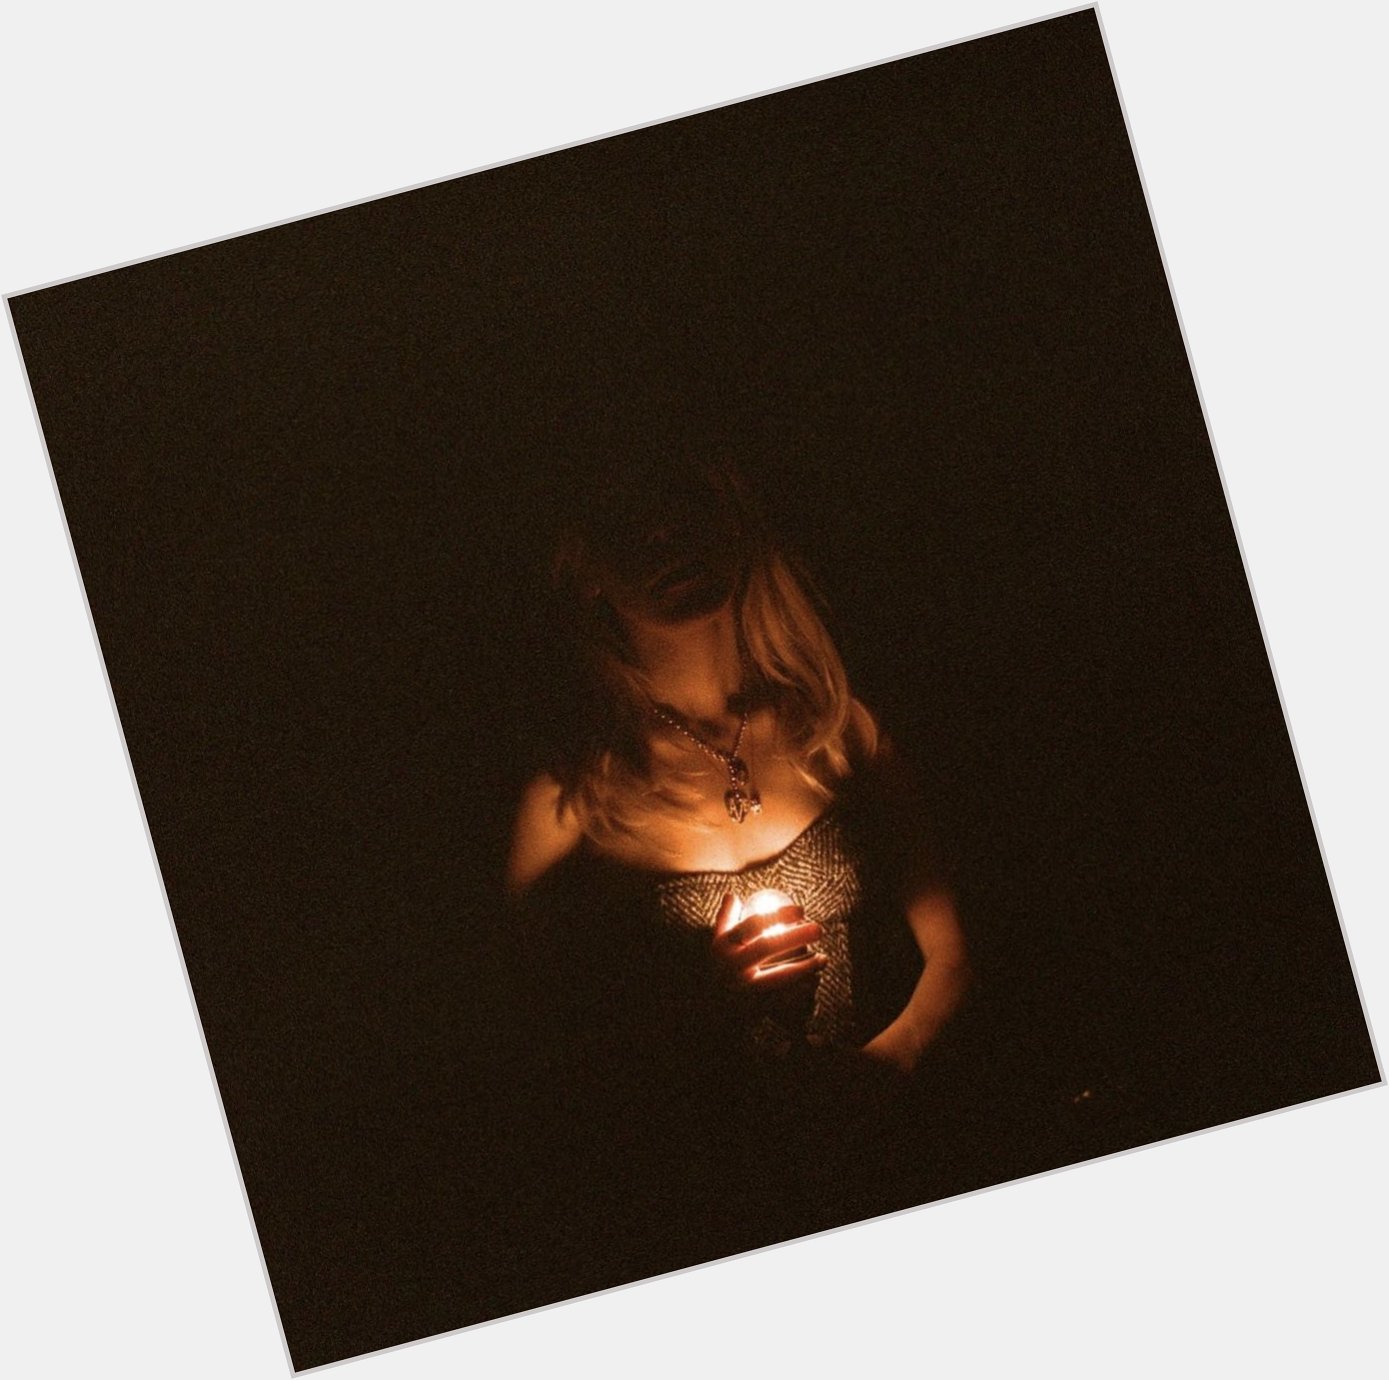  Happy Birthday Sabrina Spellman -Kiernan Shipka on Instagram 